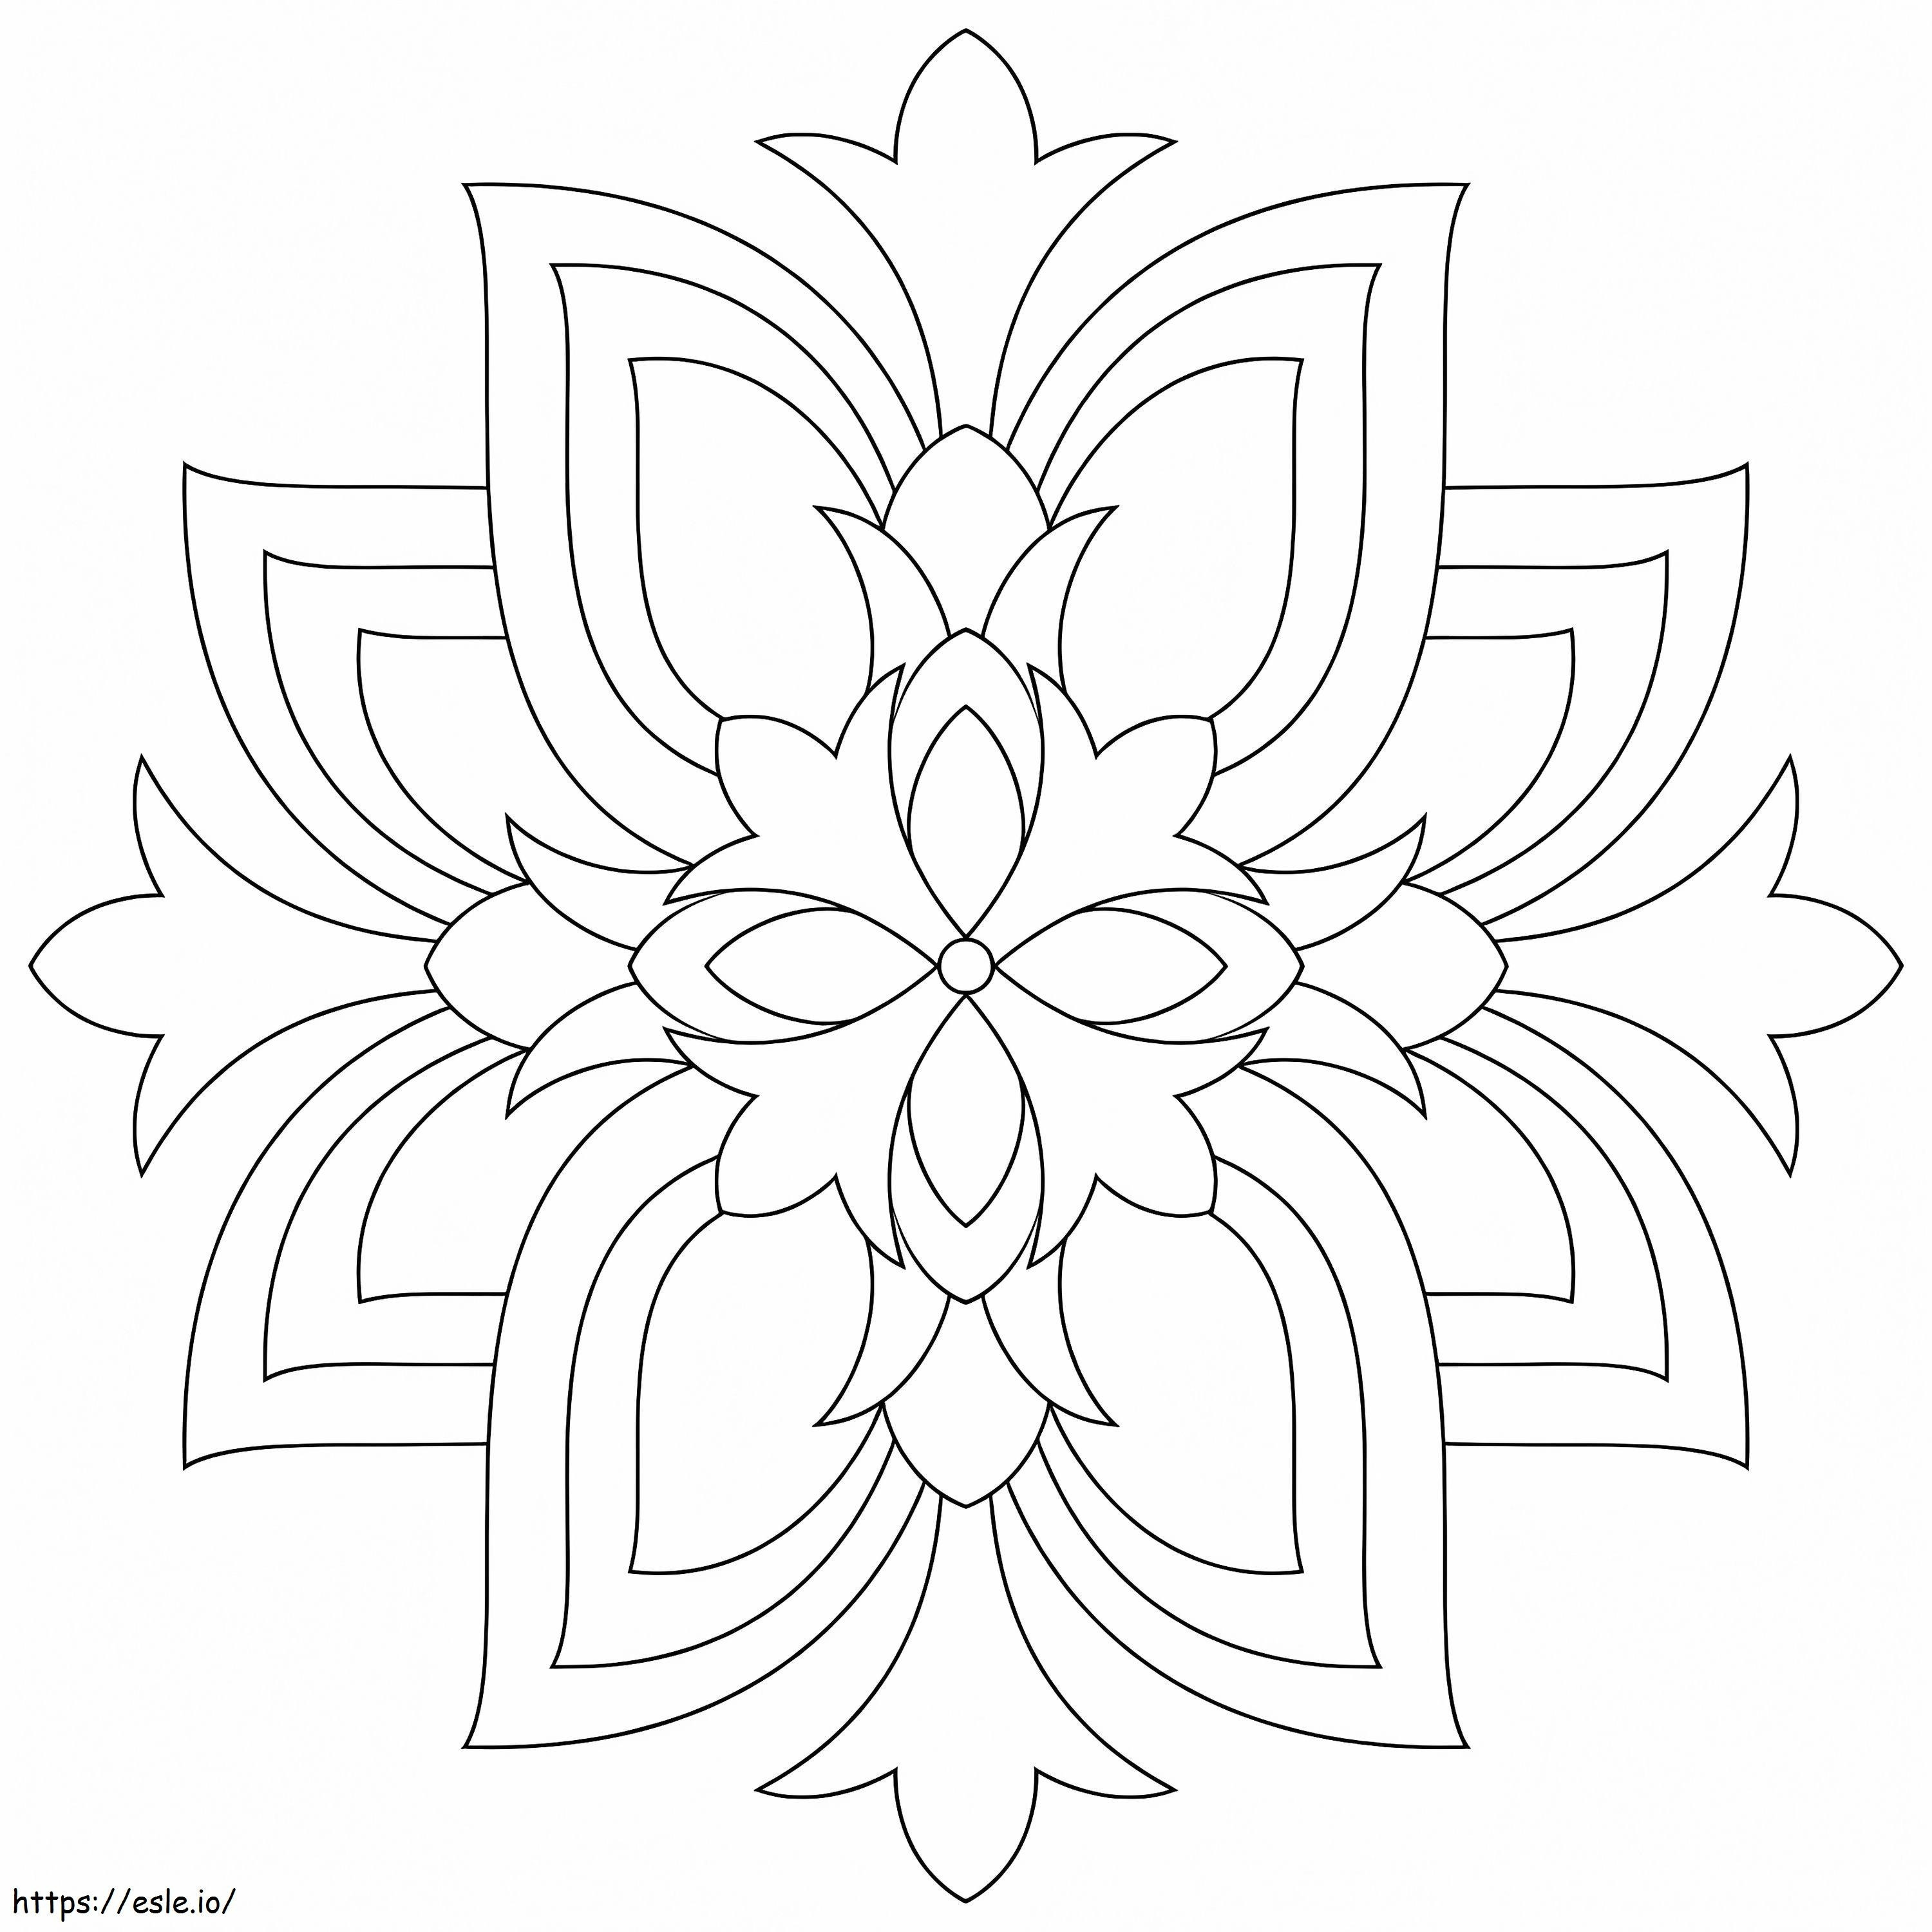 Mandala de flor de loto para colorear